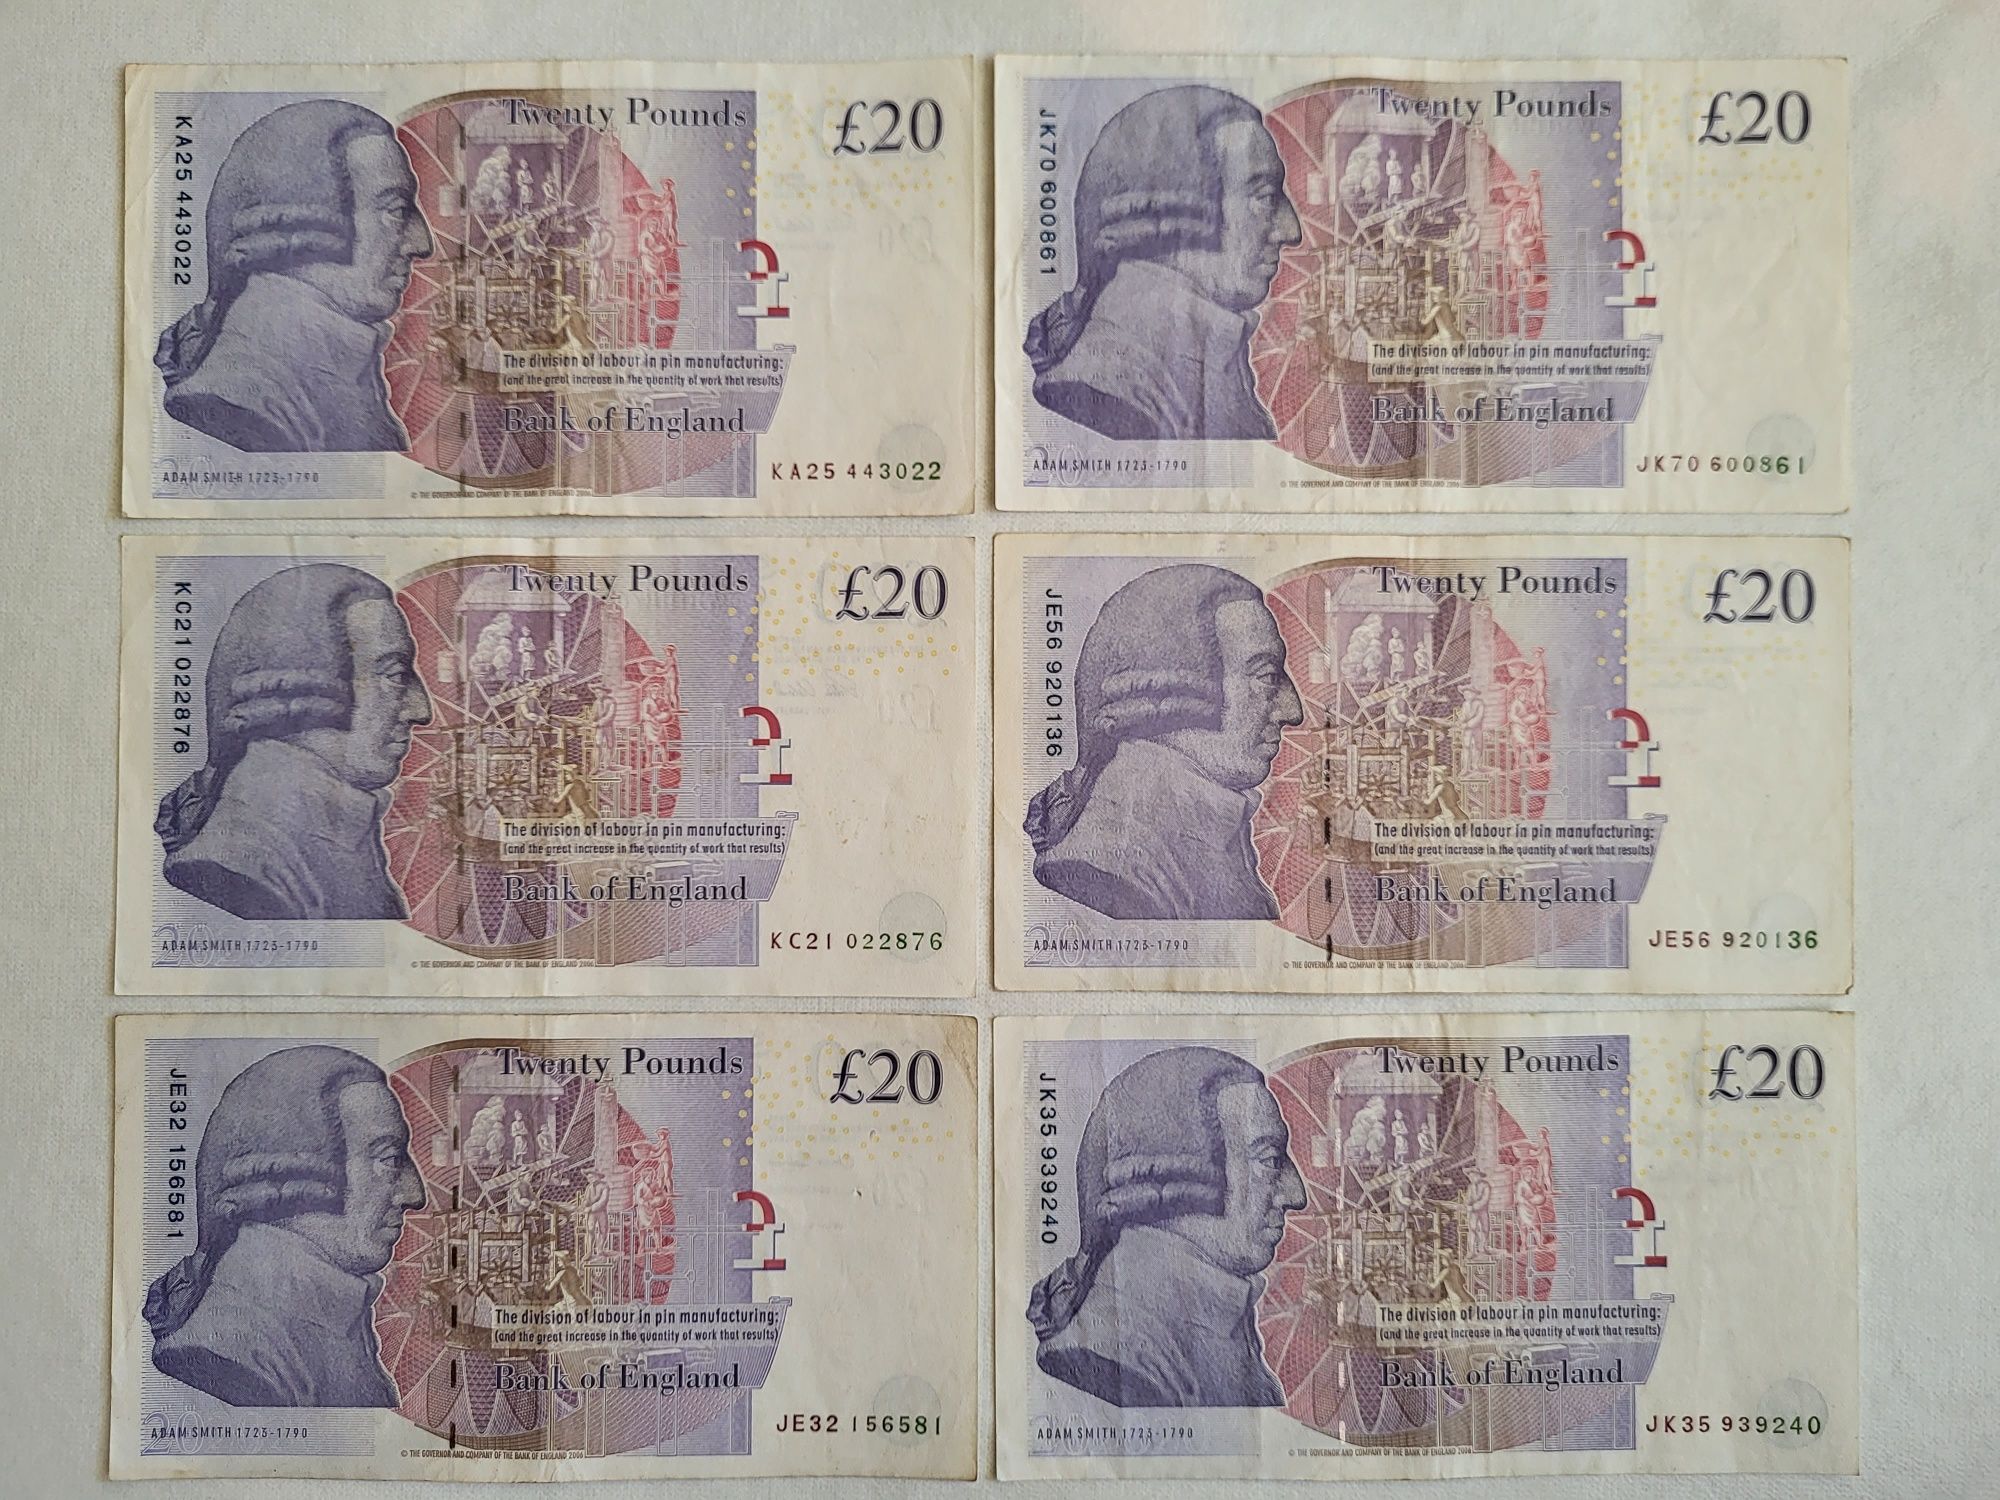 Bancnota 20 lire sterline de colecție